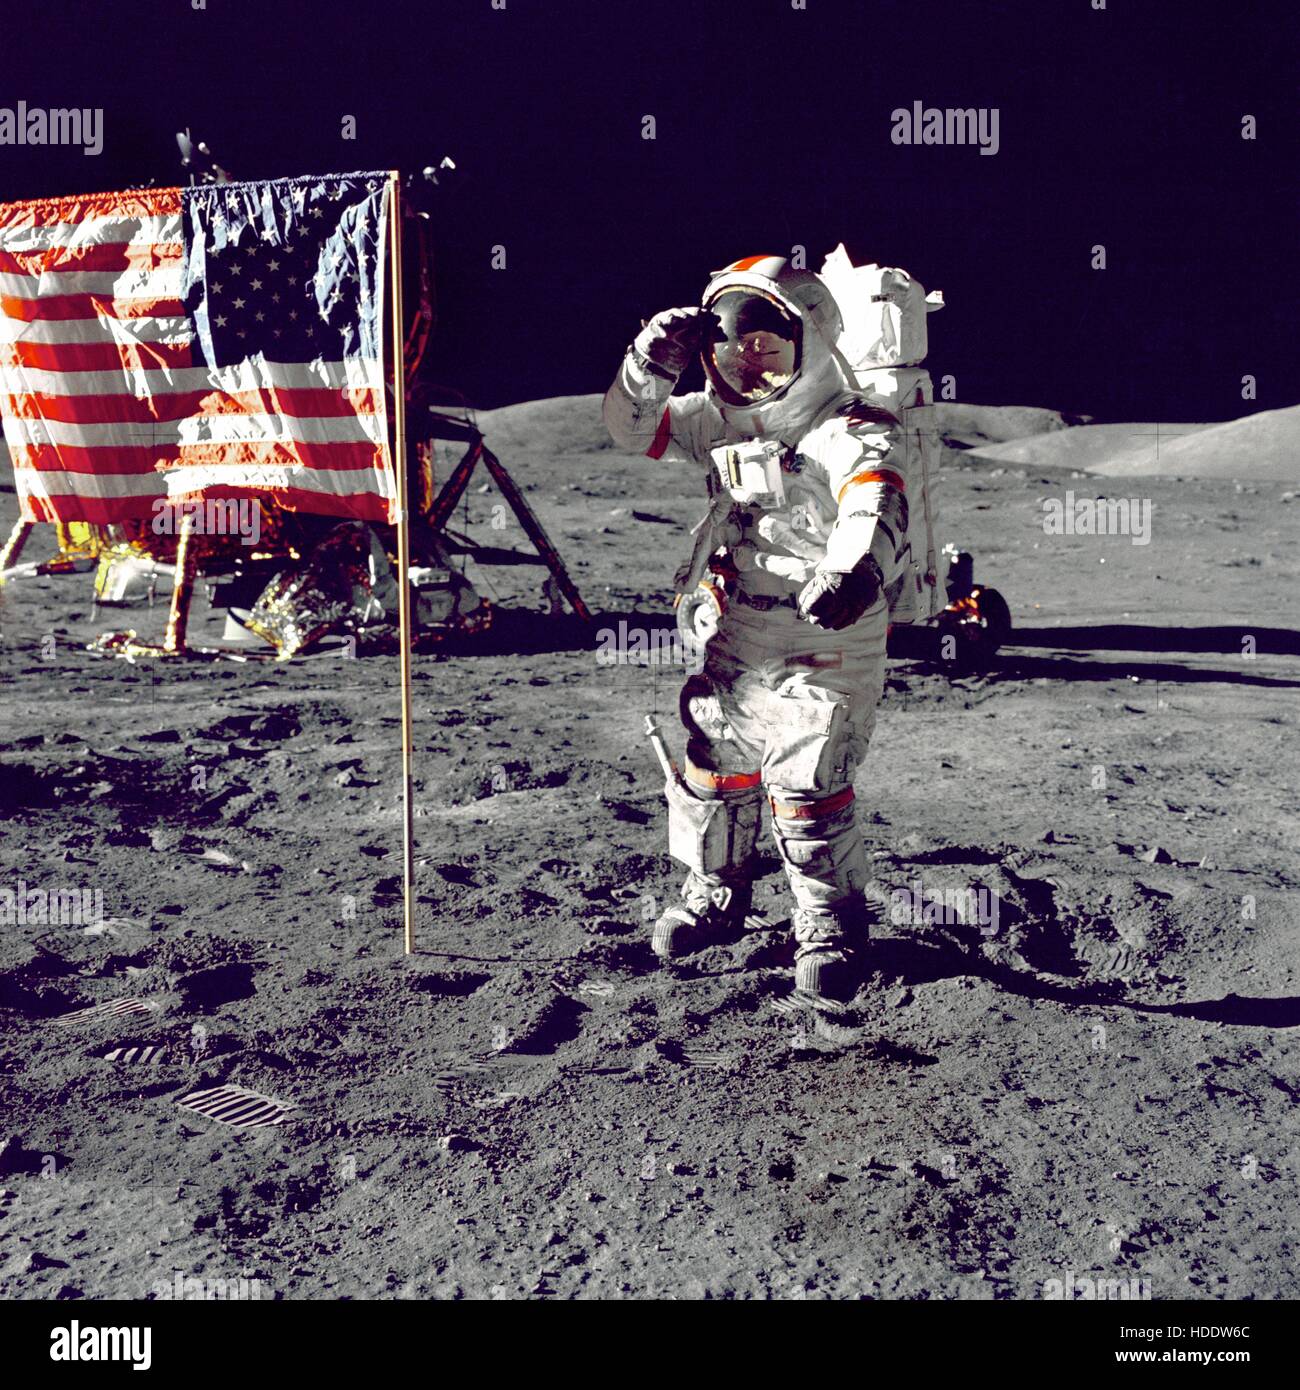 NASA Apollo 17 mission astronaut Eugene Cernan salutes the American flag on the lunar surface during an EVA spacewalk December 13, 1972 on the Taurus-Littrow region of the Moon. Stock Photo